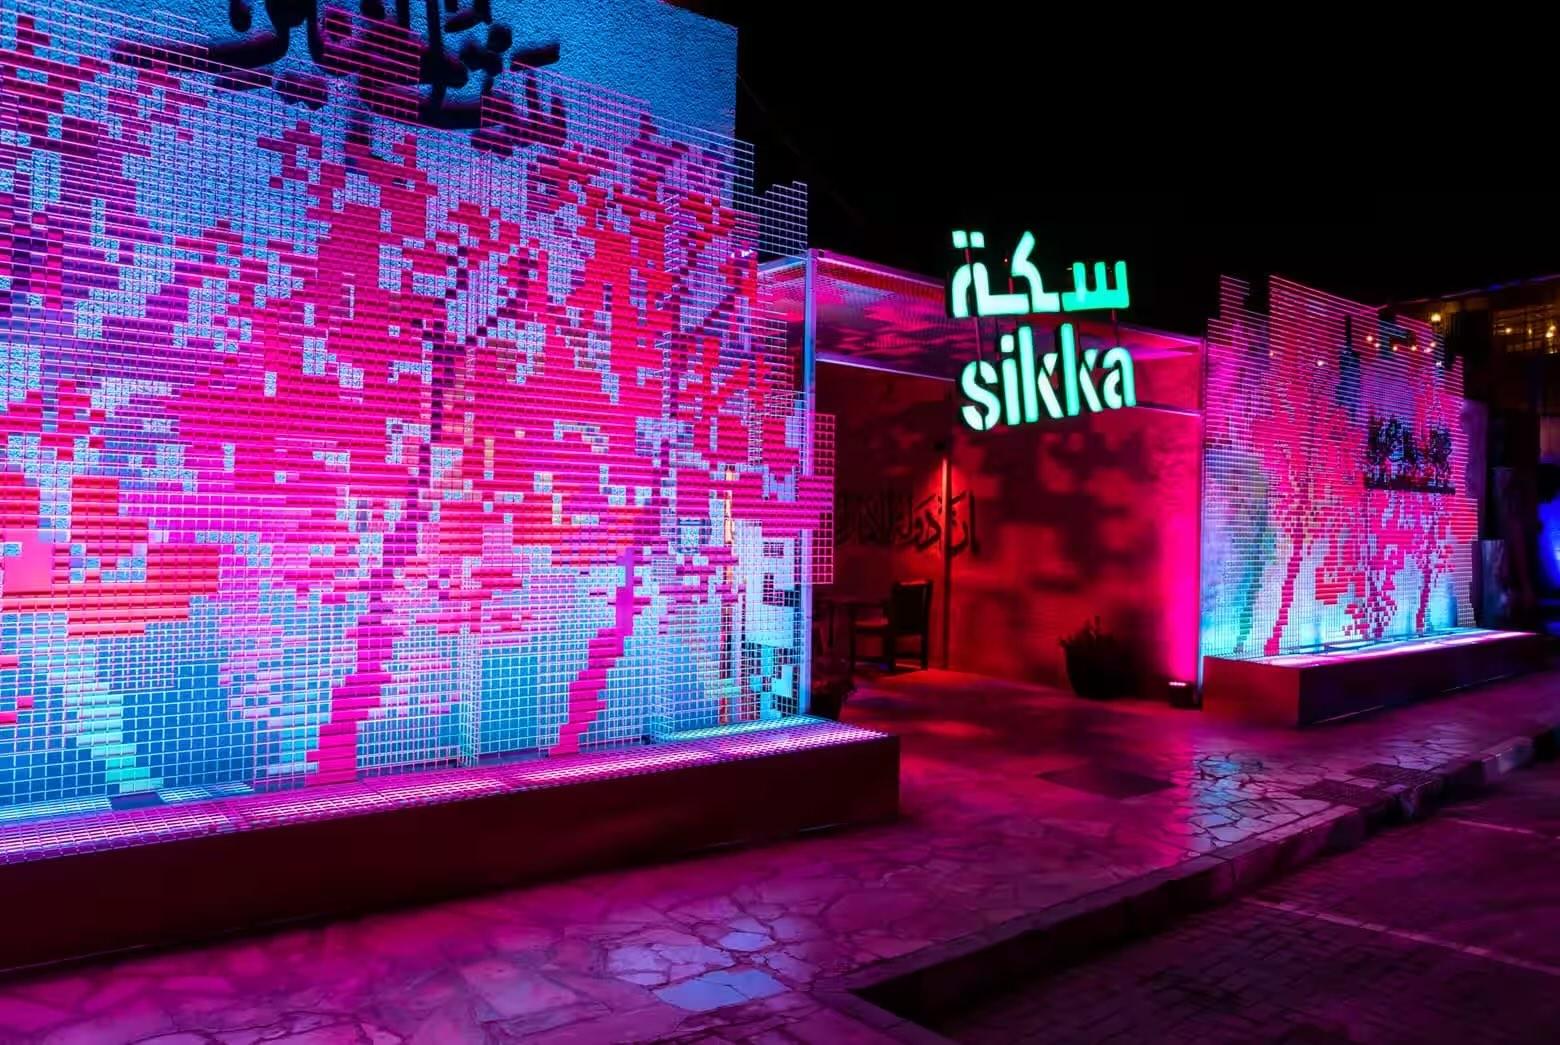 Sikka Arts Festival takes over Dubai's Al Shindagha Neighbourhood